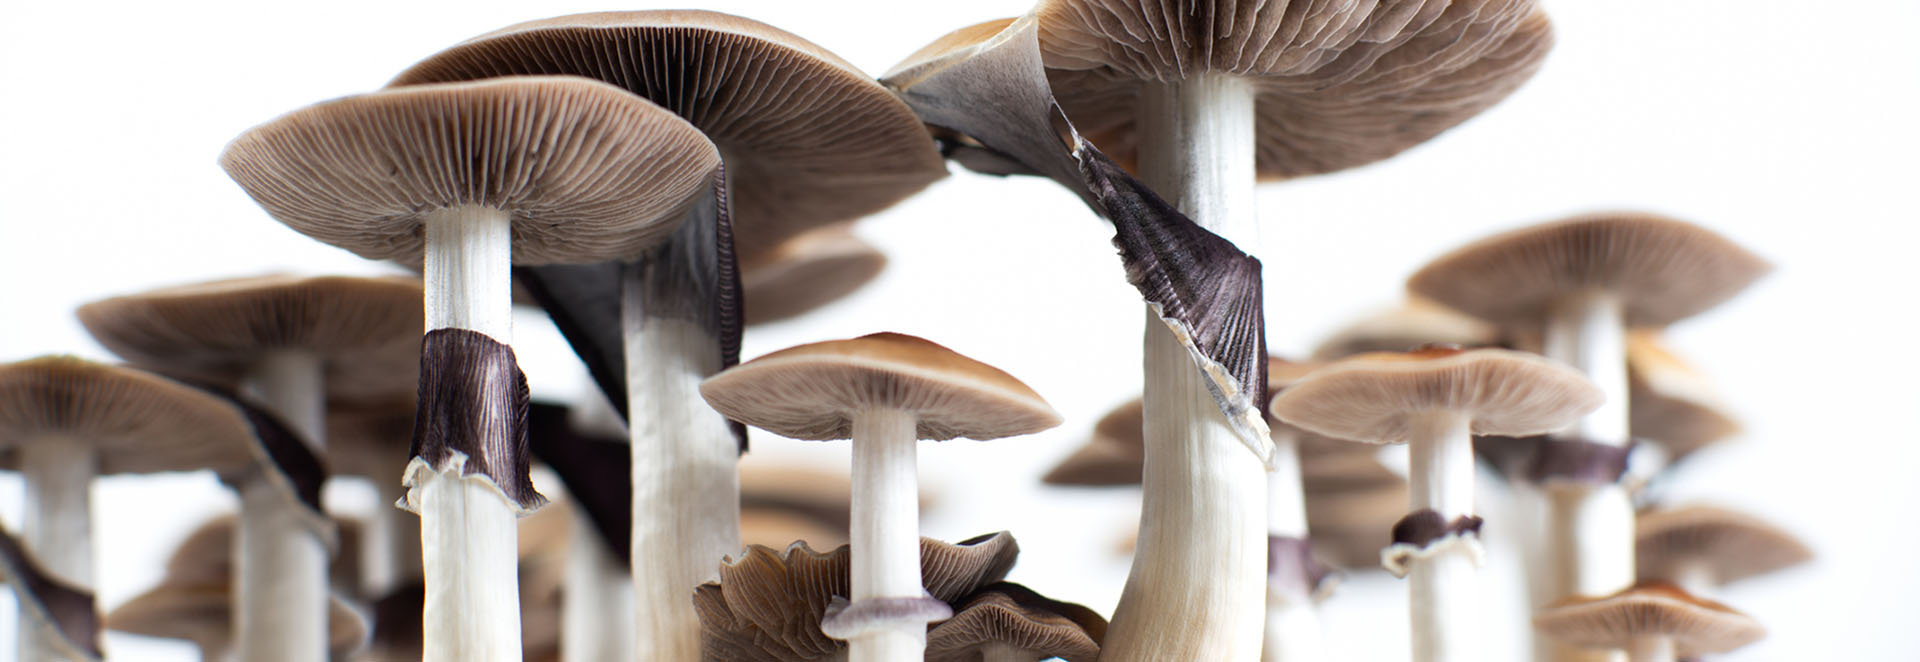 Close up of mushrooms